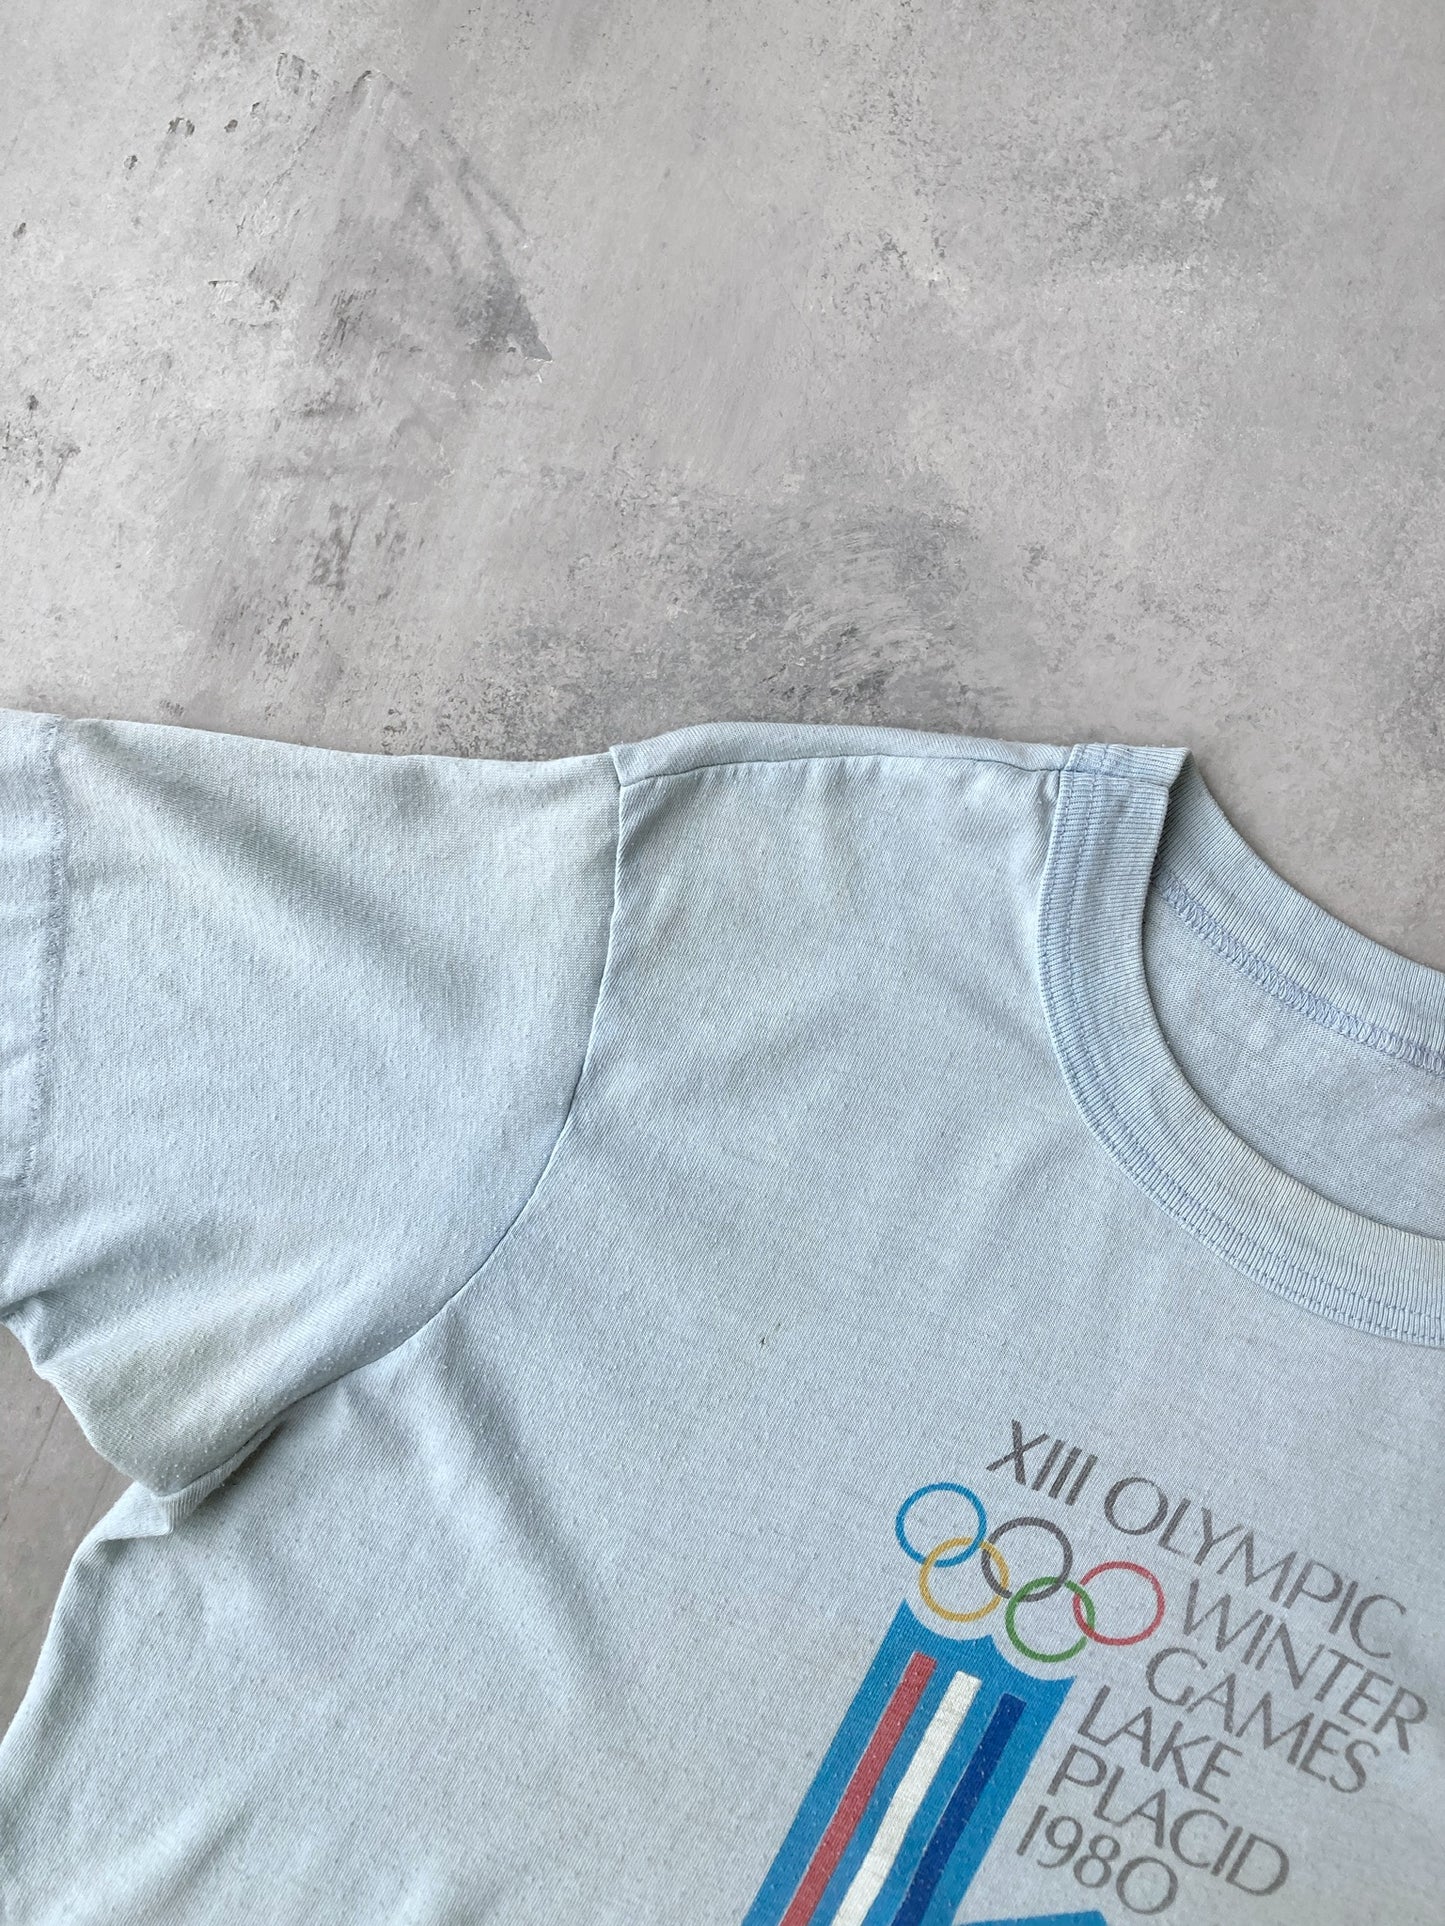 Olympic Games Lake Placid T-Shirt '80 - Medium